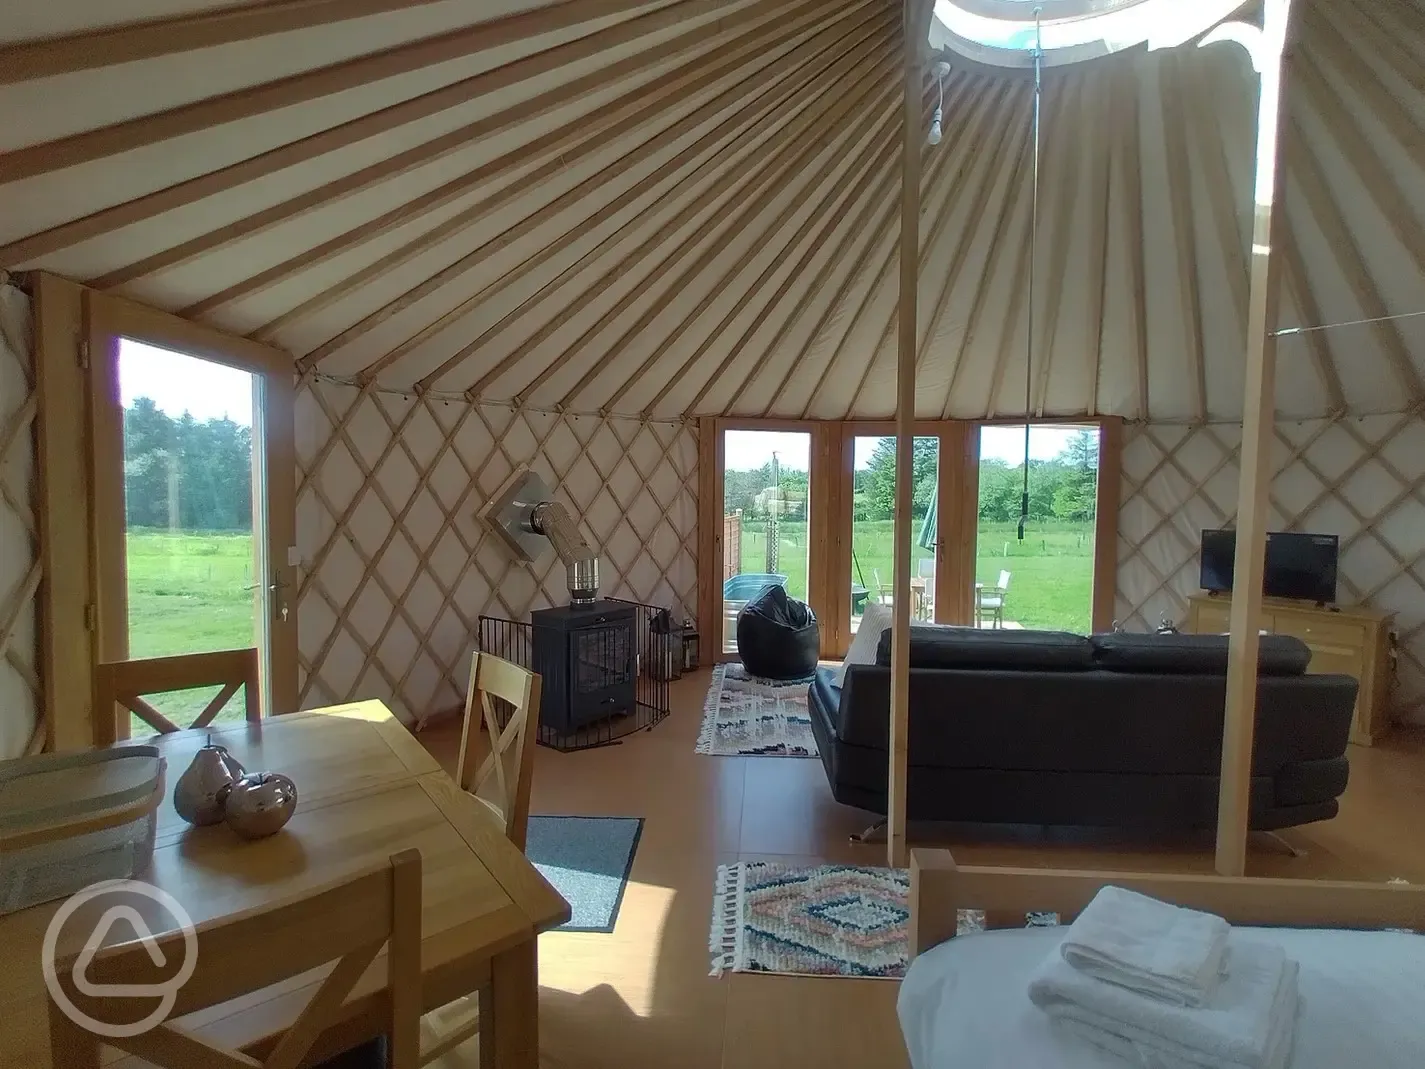 Luxury European yurt interior